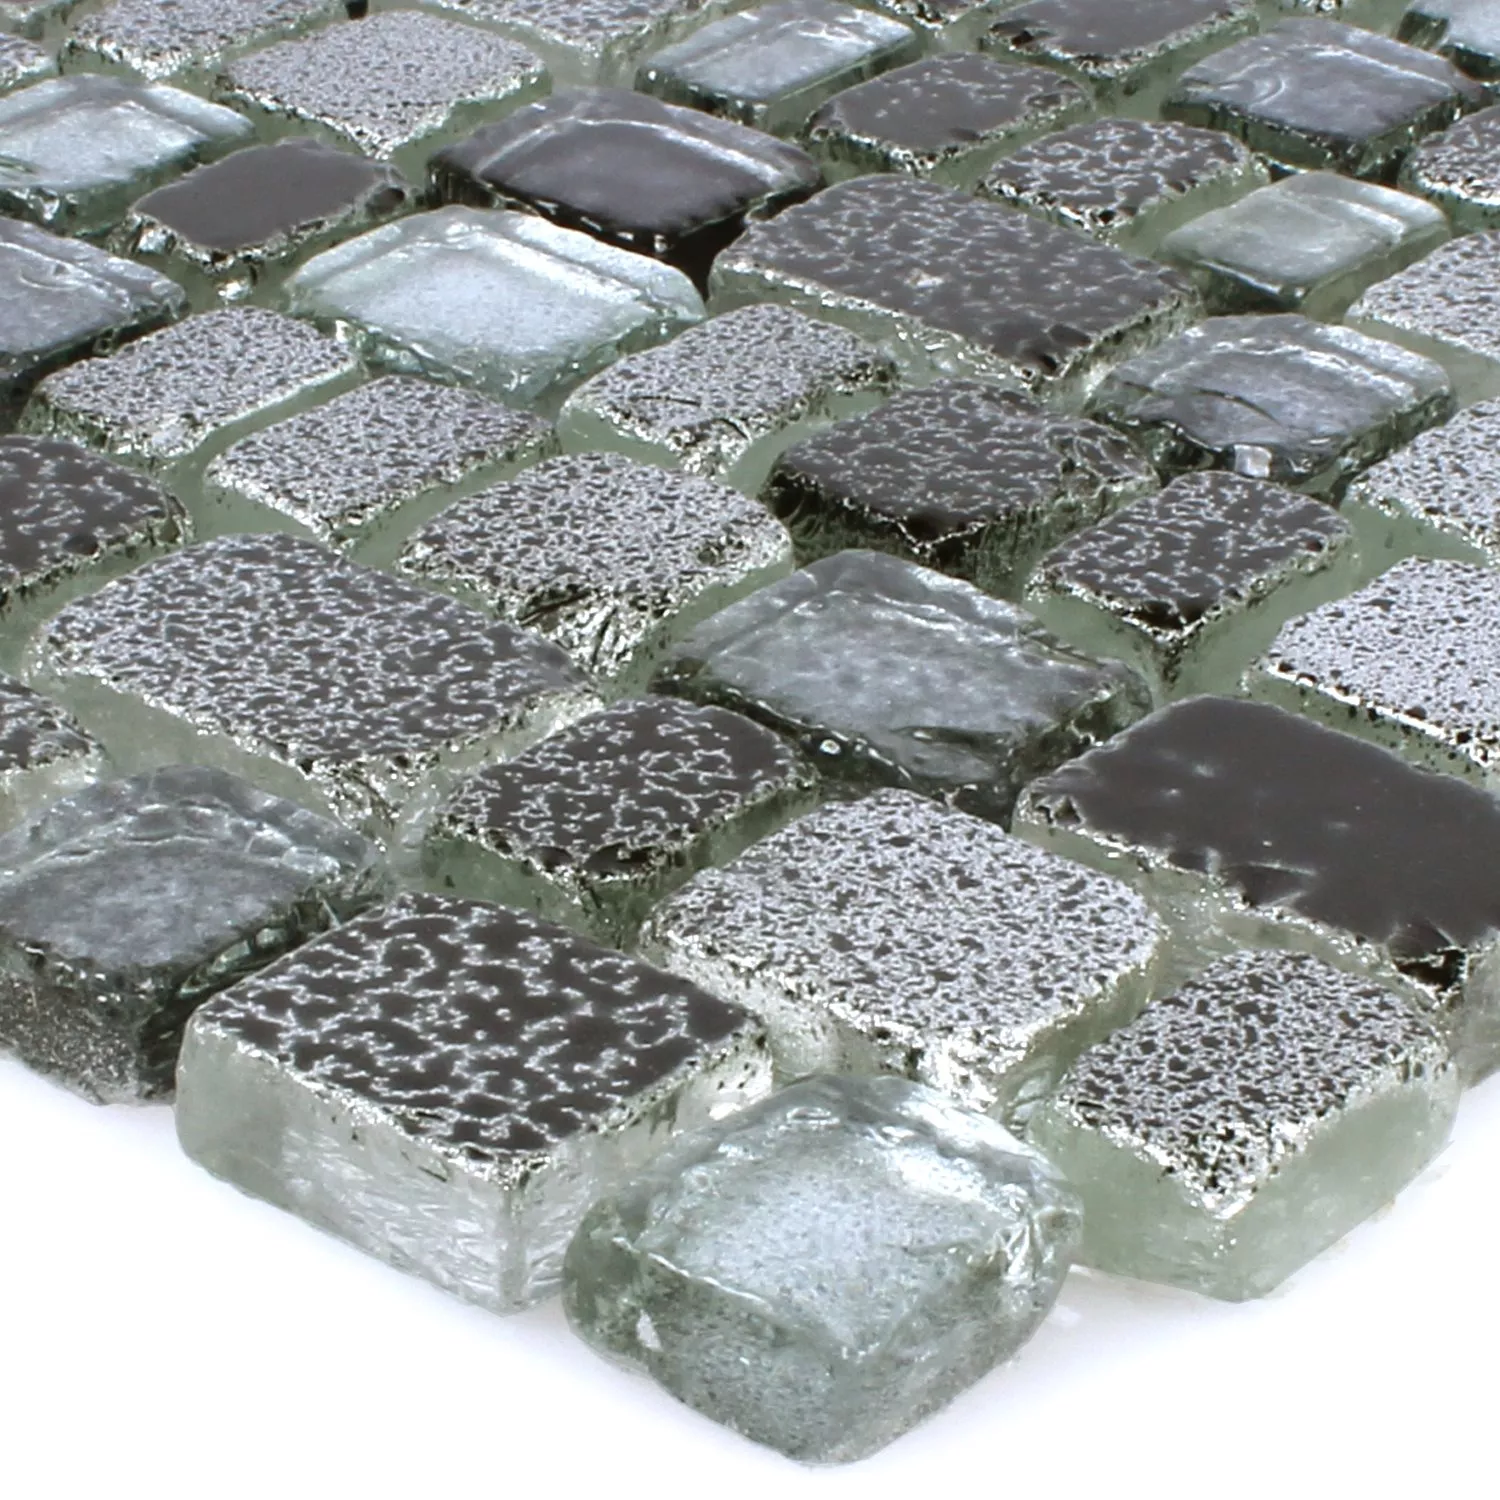 Sample Mosaic Tiles Glass Roxy Black Silver